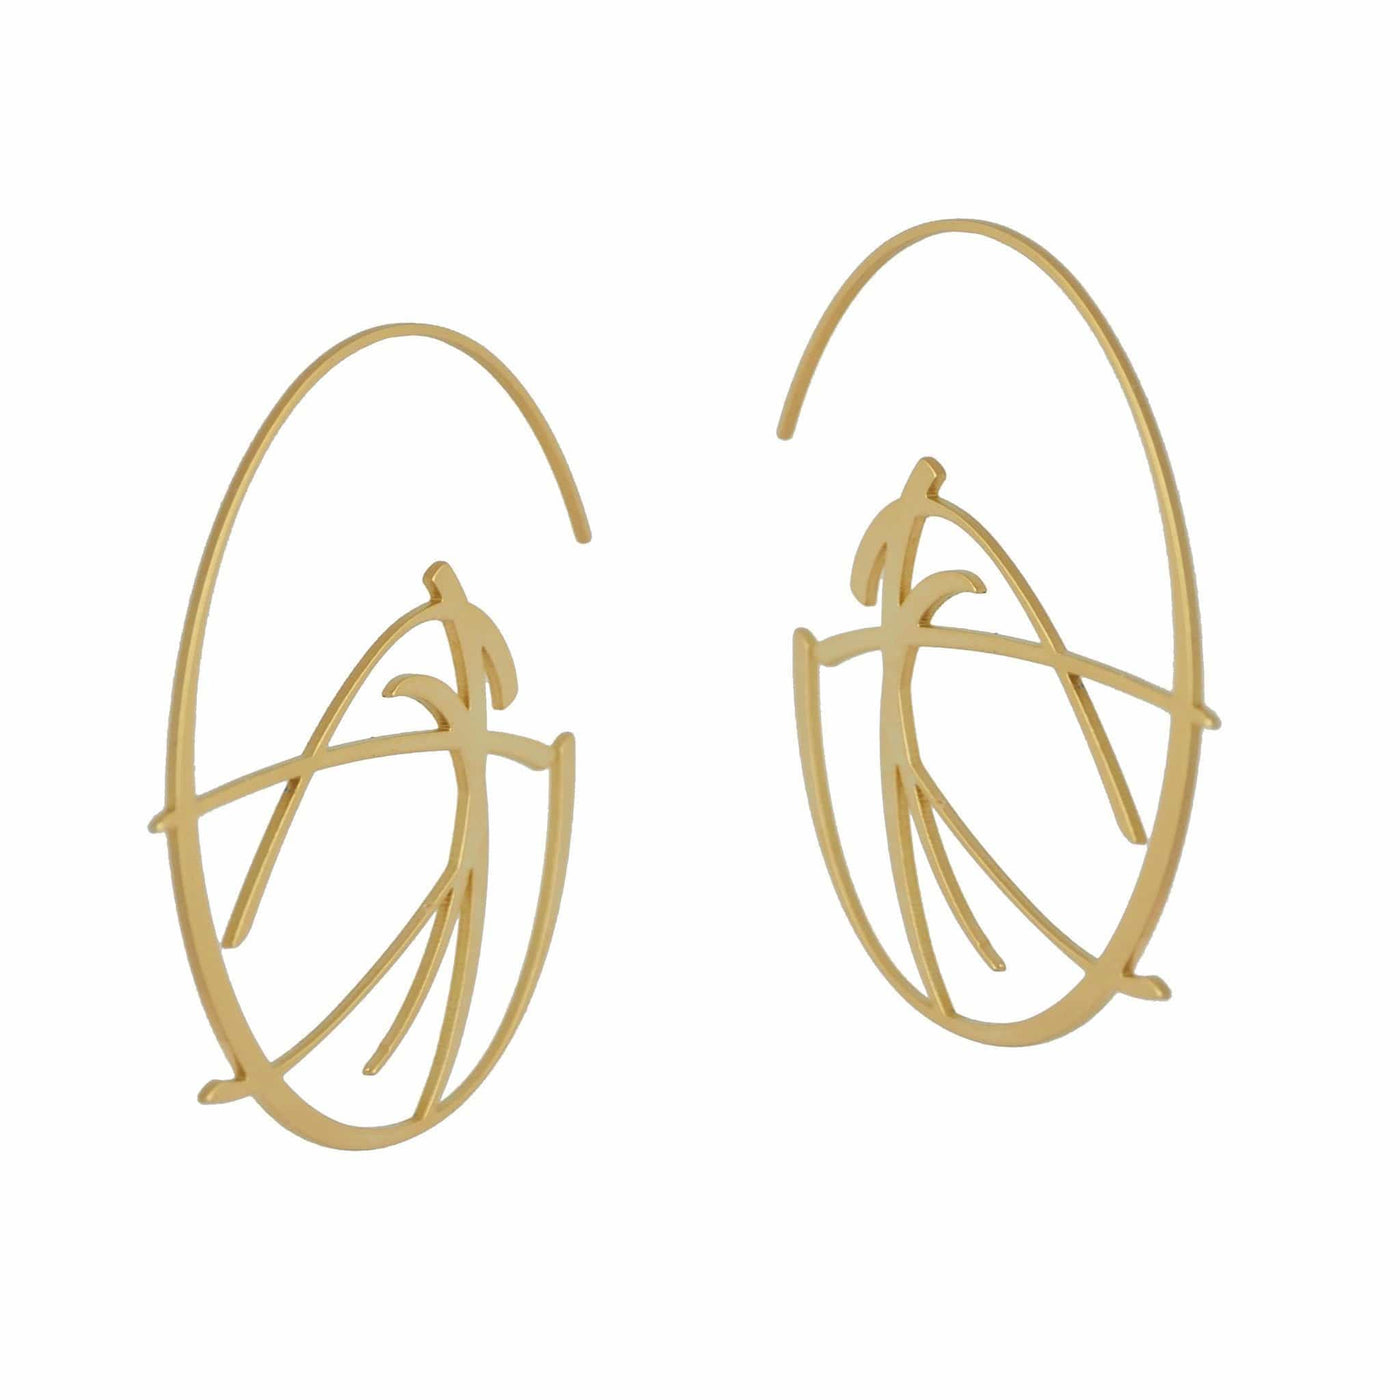 Flux Hoop Earrings - Raw Stainless Steel - inSync design